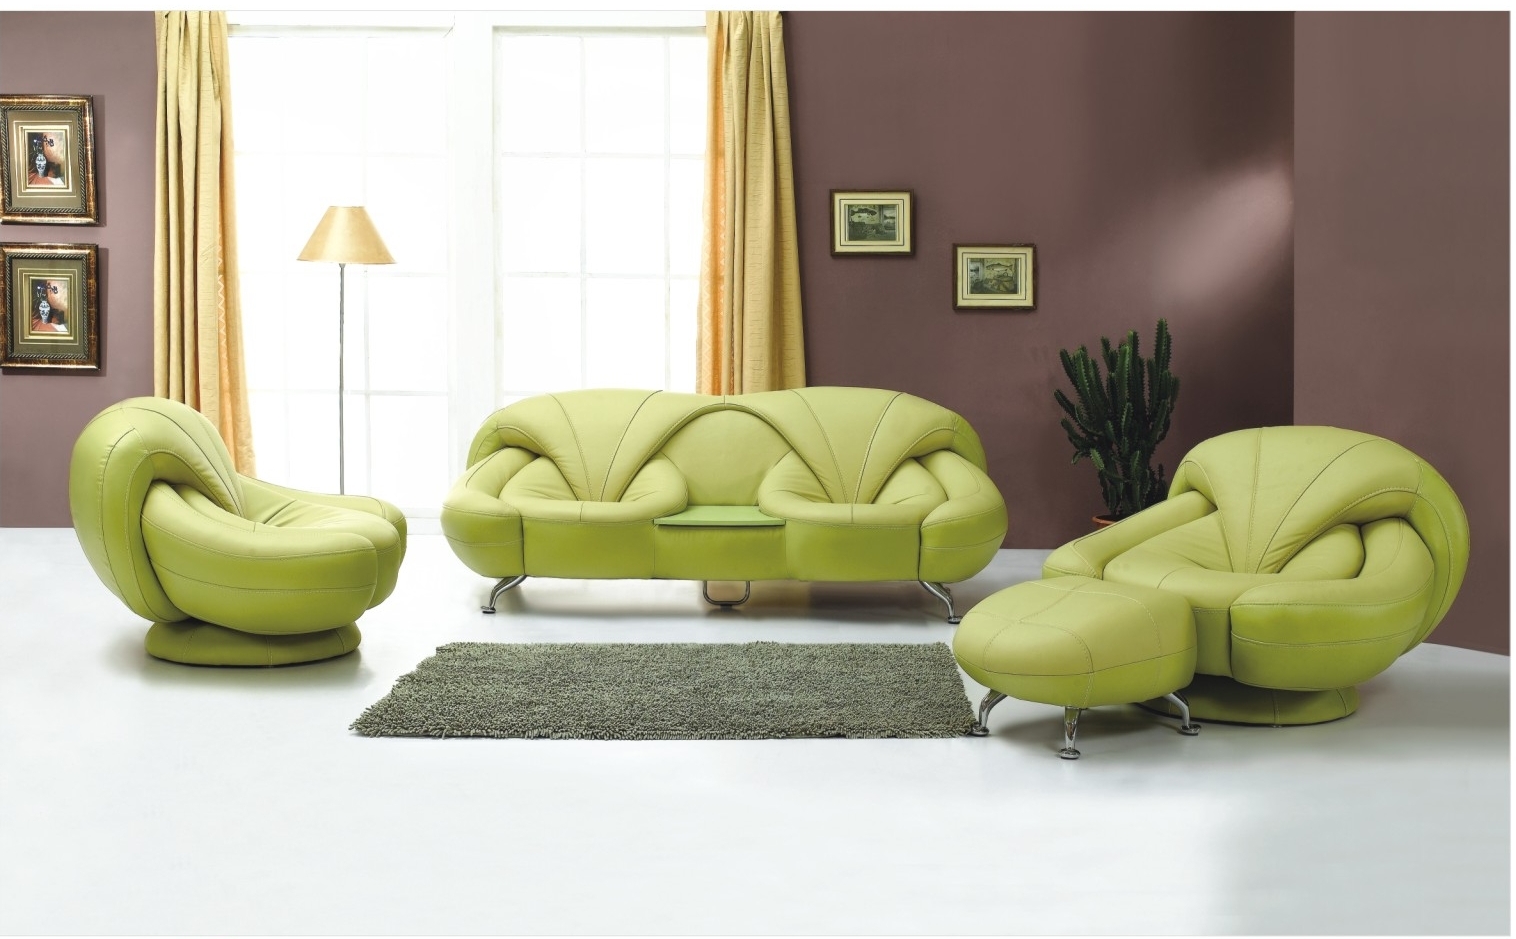 Modern living room furniture designs ideas.  An Interior Design